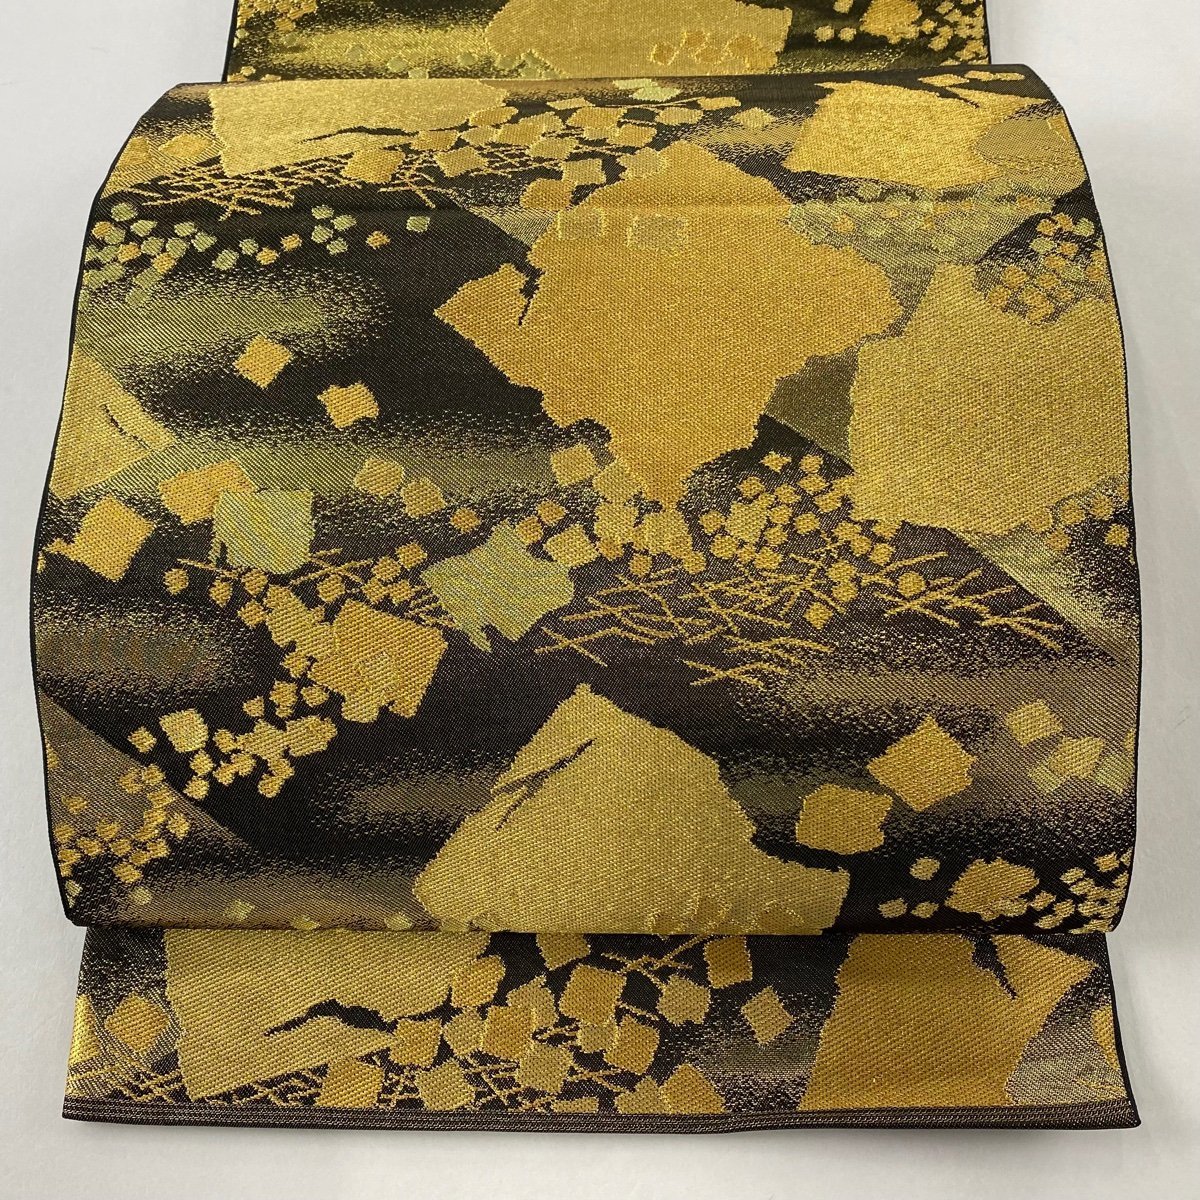 ヤフオク! -川島織物 袋帯の中古品・新品・未使用品一覧